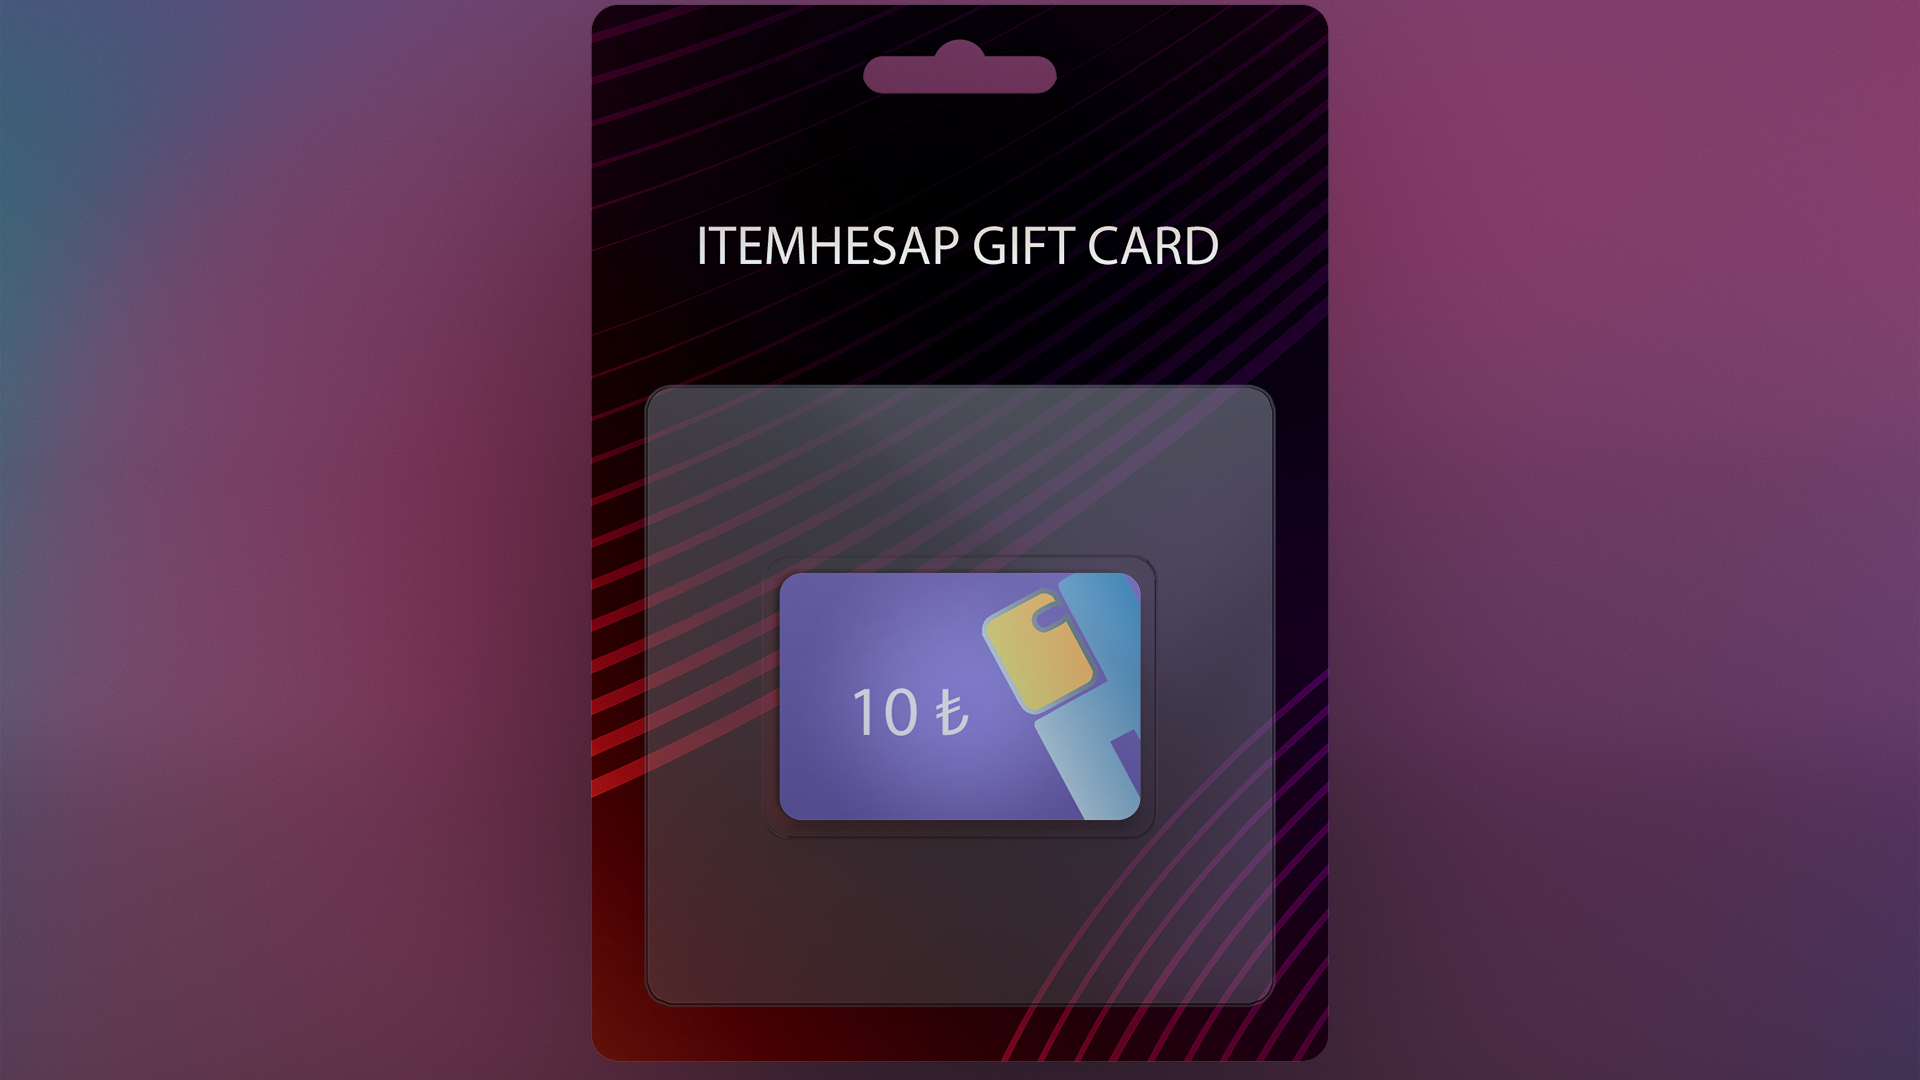 ItemHesap ₺10 Gift Card, $1.14